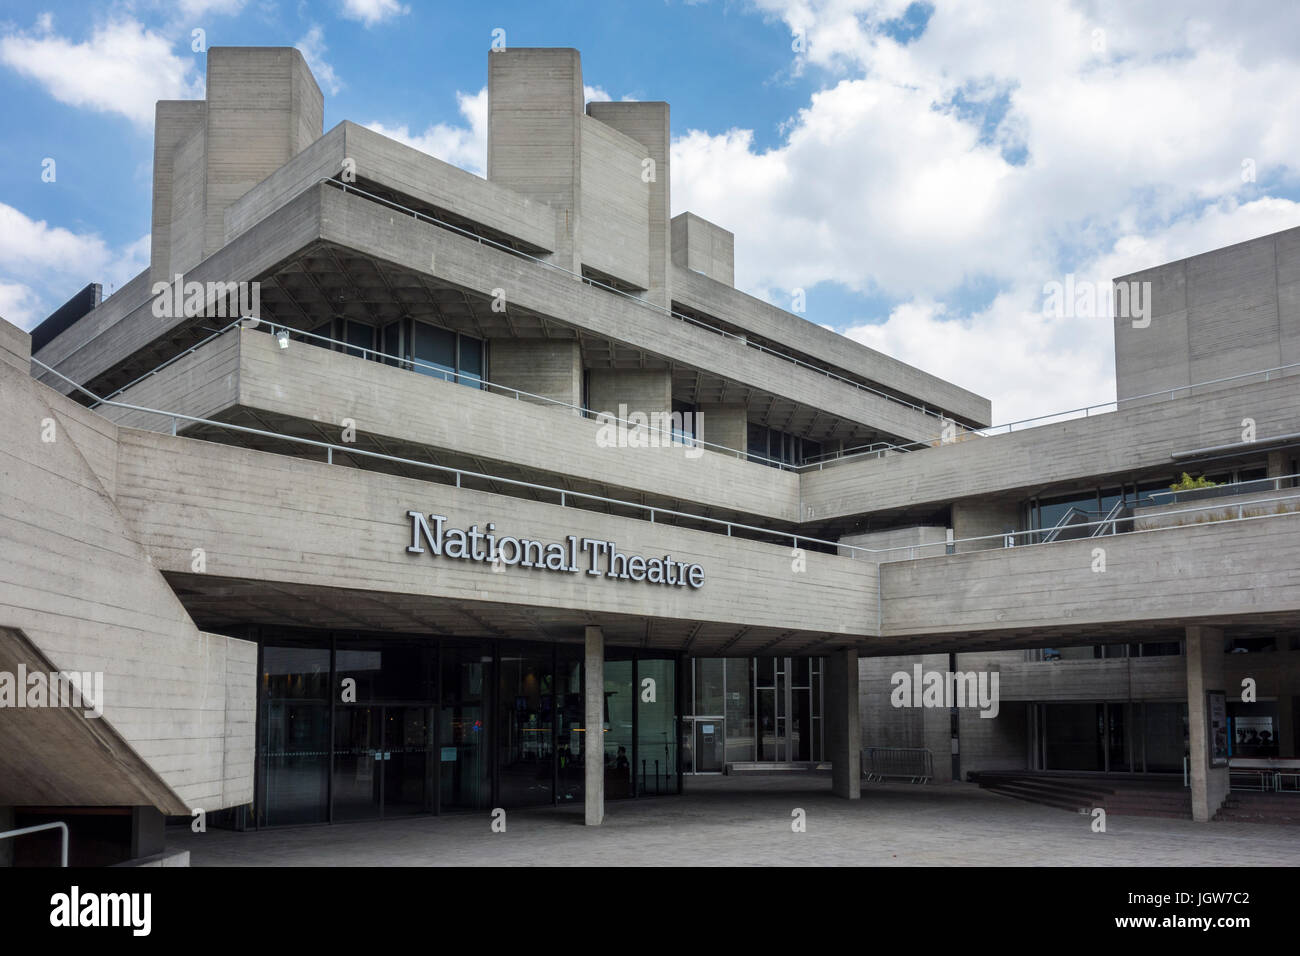 Brutalist architecture London: The Royal National Theatre brutalist / brutalism building by Denys Lasdun. Southbank, London, UK Stock Photo